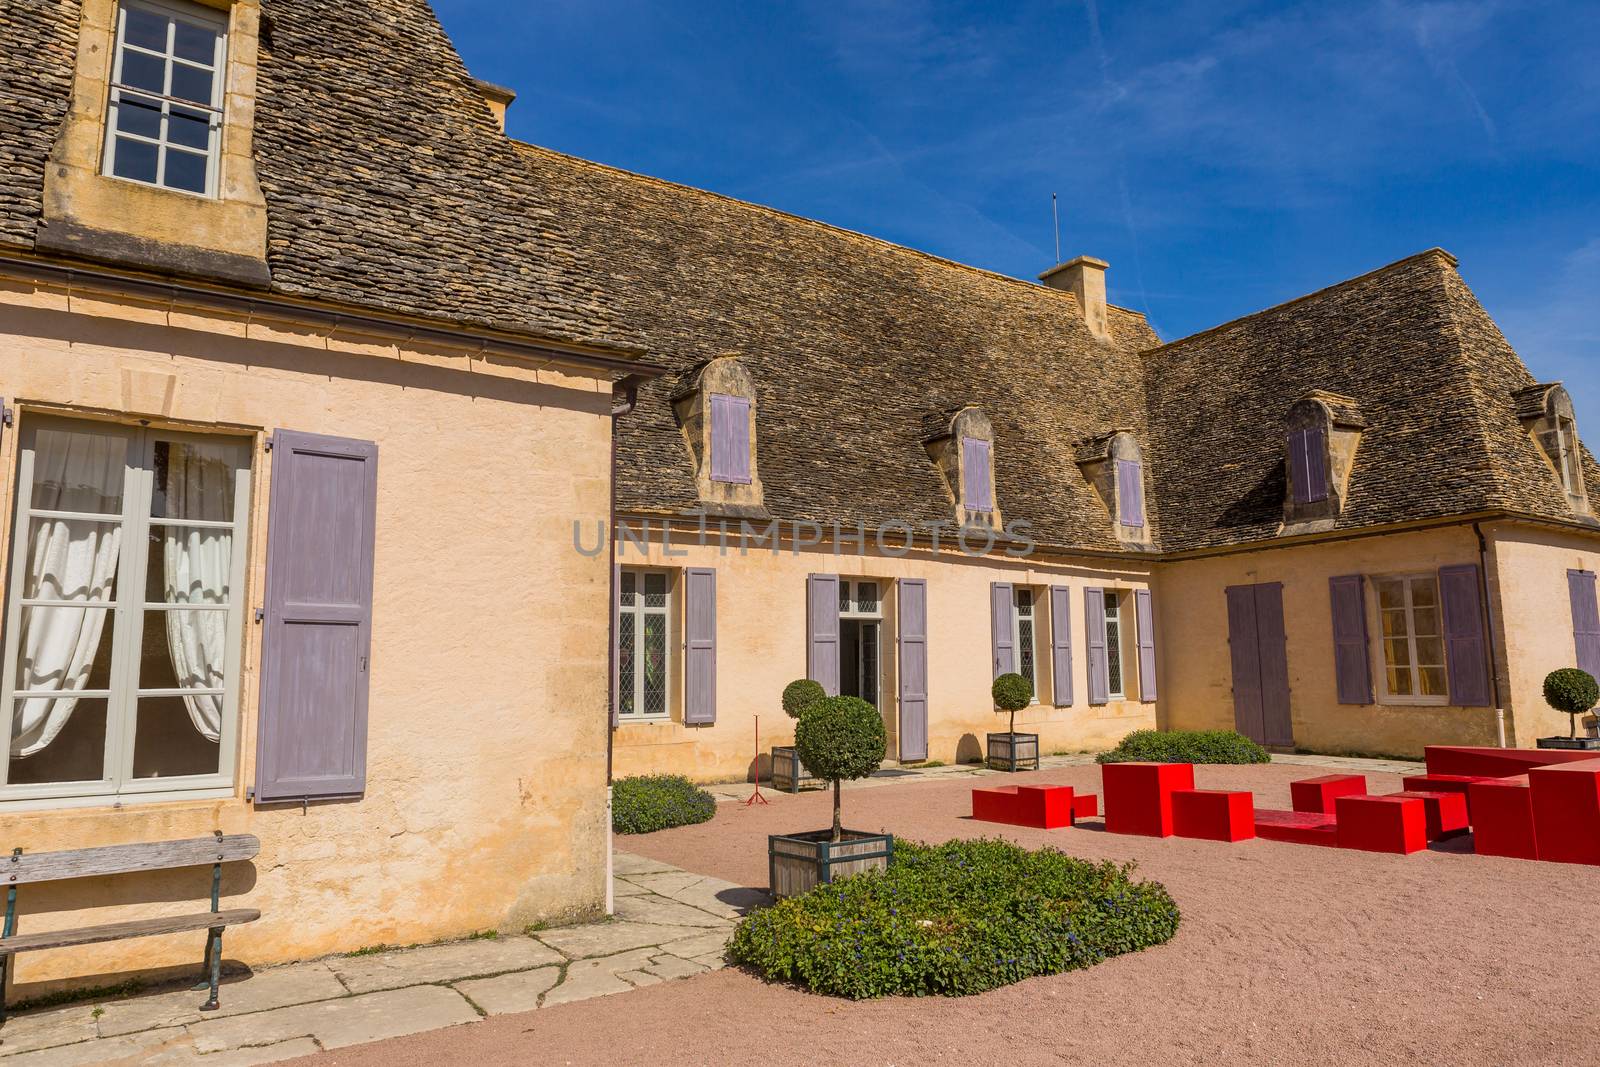 Dordogne, France: The Castle of the gardens of the Jardins de Marqueyssac in the Dordogne region of France